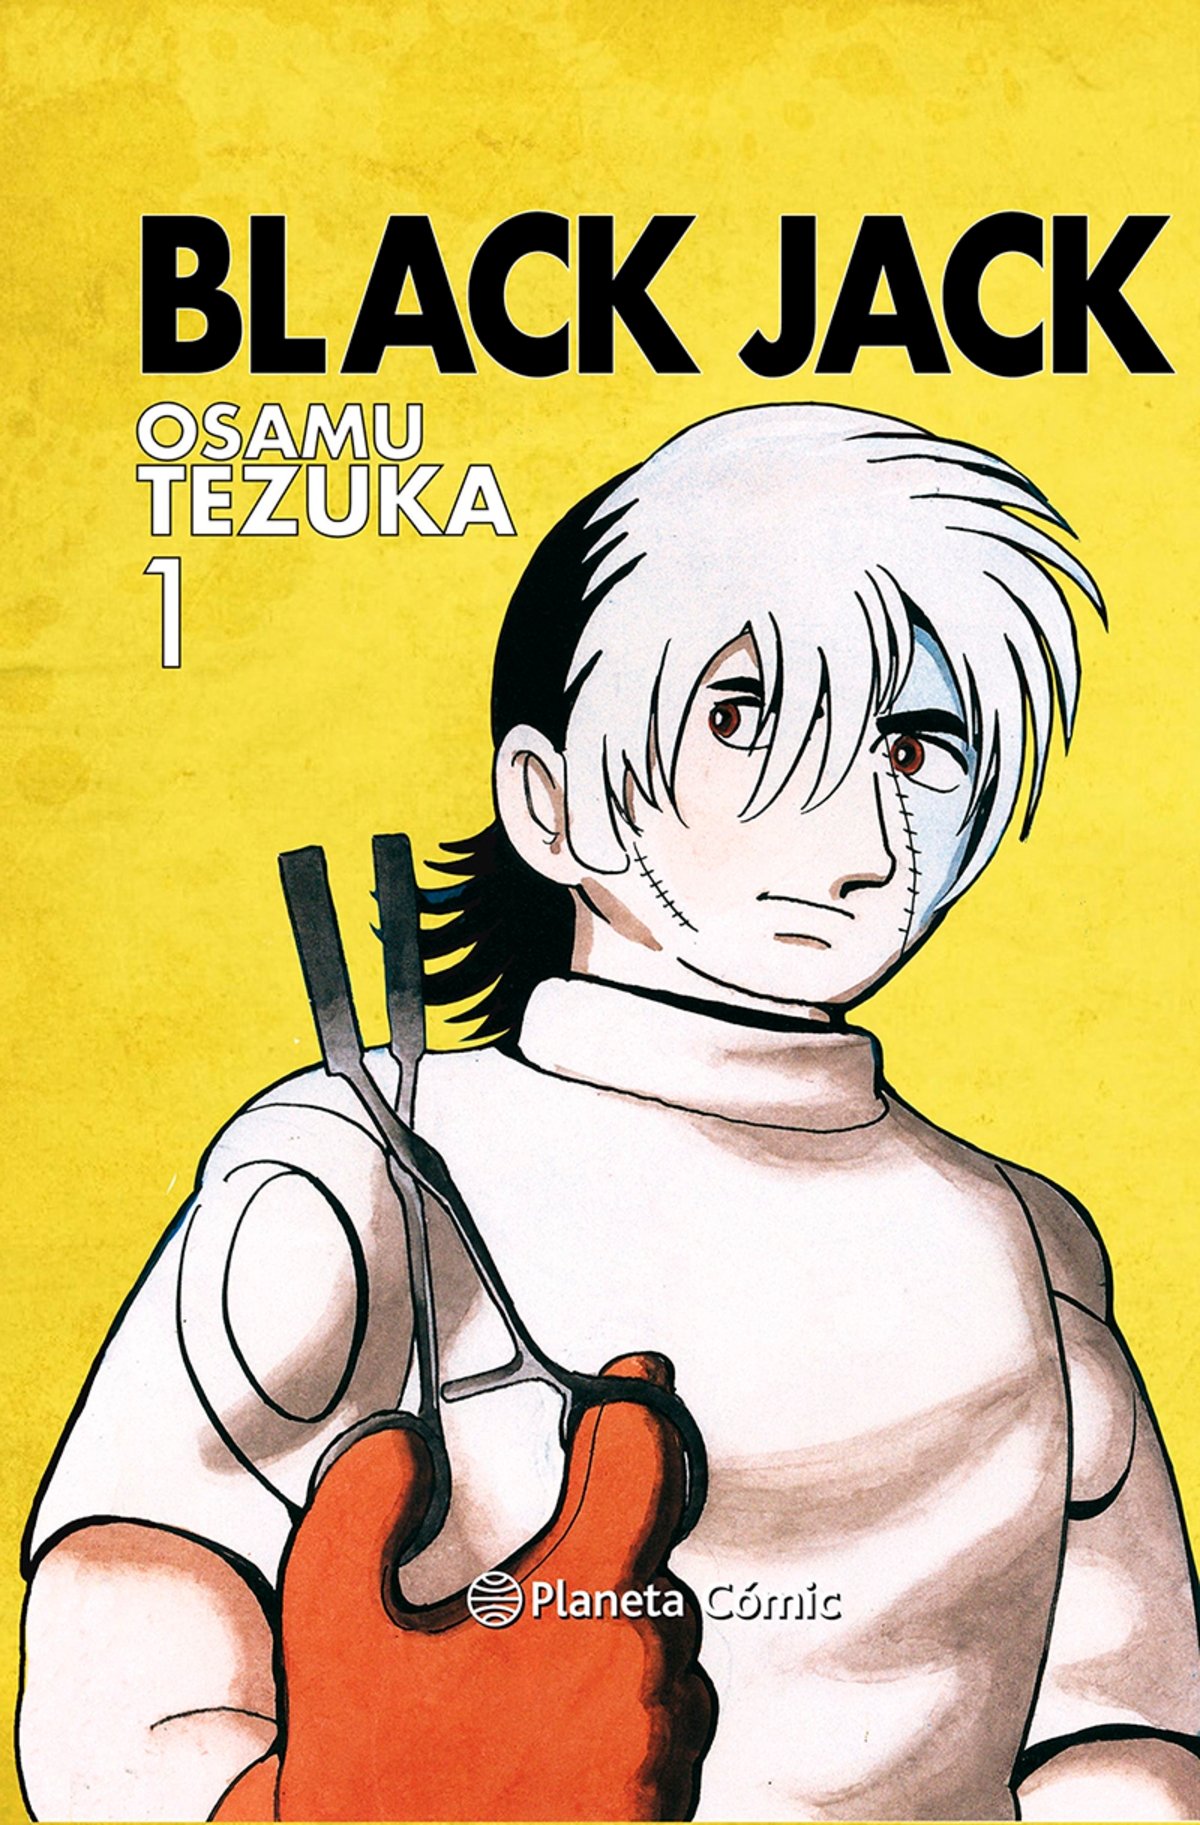 No Solo Gaming: Black Jack de Osamu Tezuka